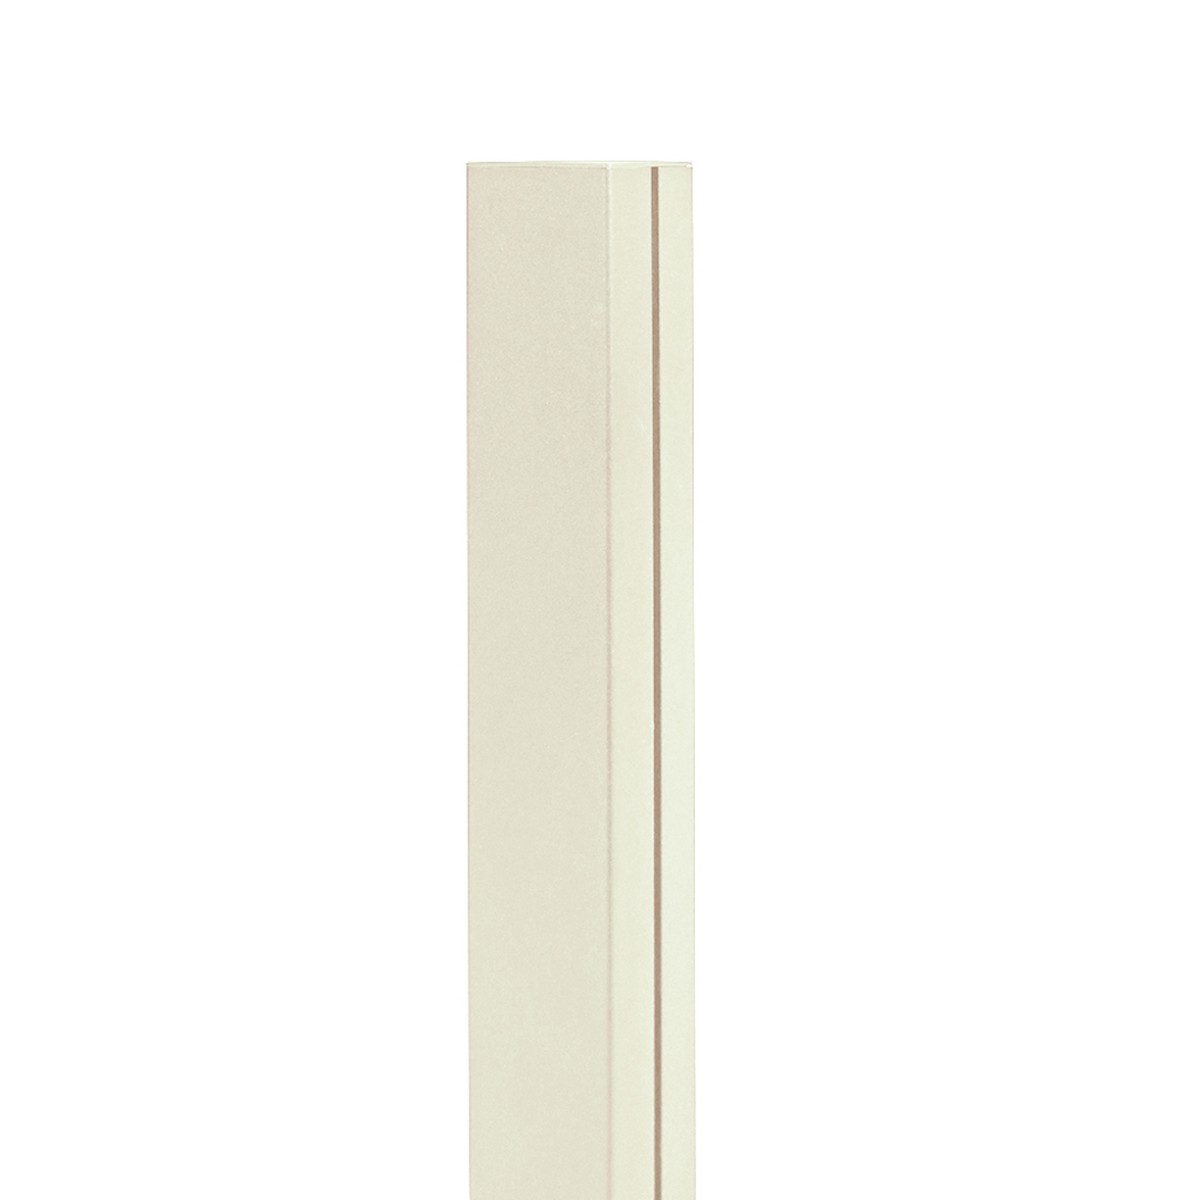 Nortene  ALUPOST 215 BL x4 (poteau aluminium) Blanc albâtre 2.15m